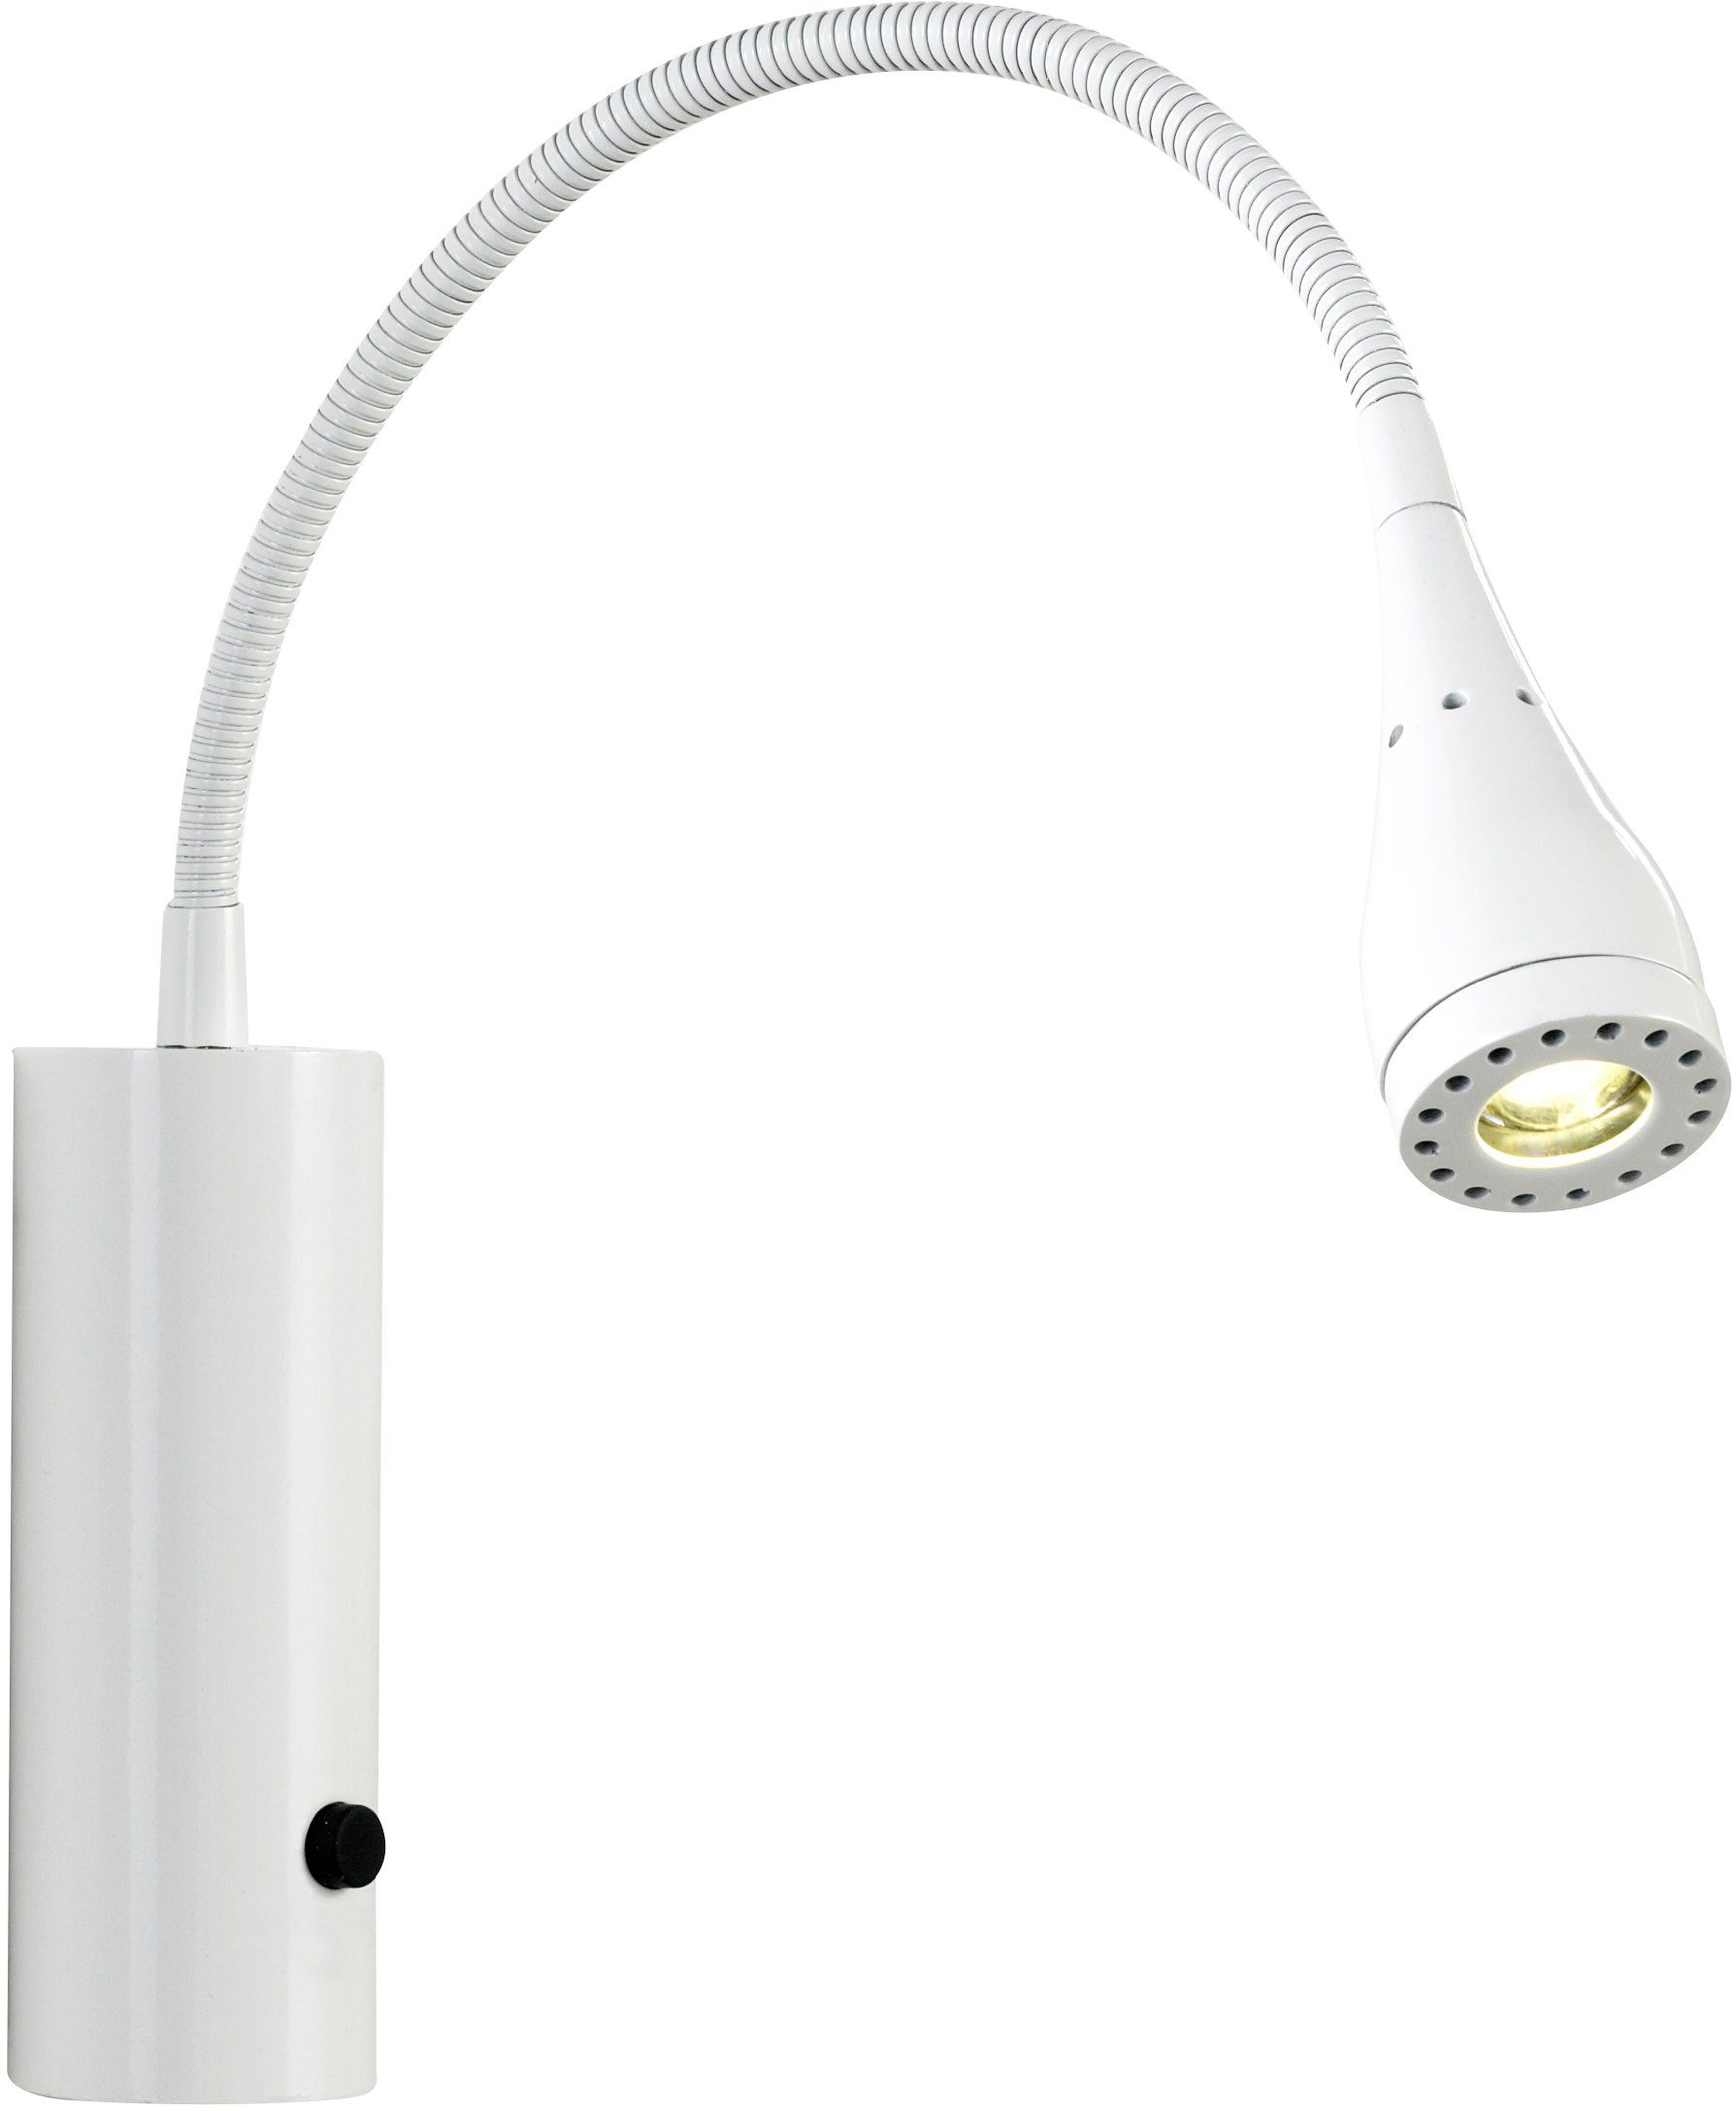 Nordlux LED Leselampe fest Warmweiß integriert, LED Mento